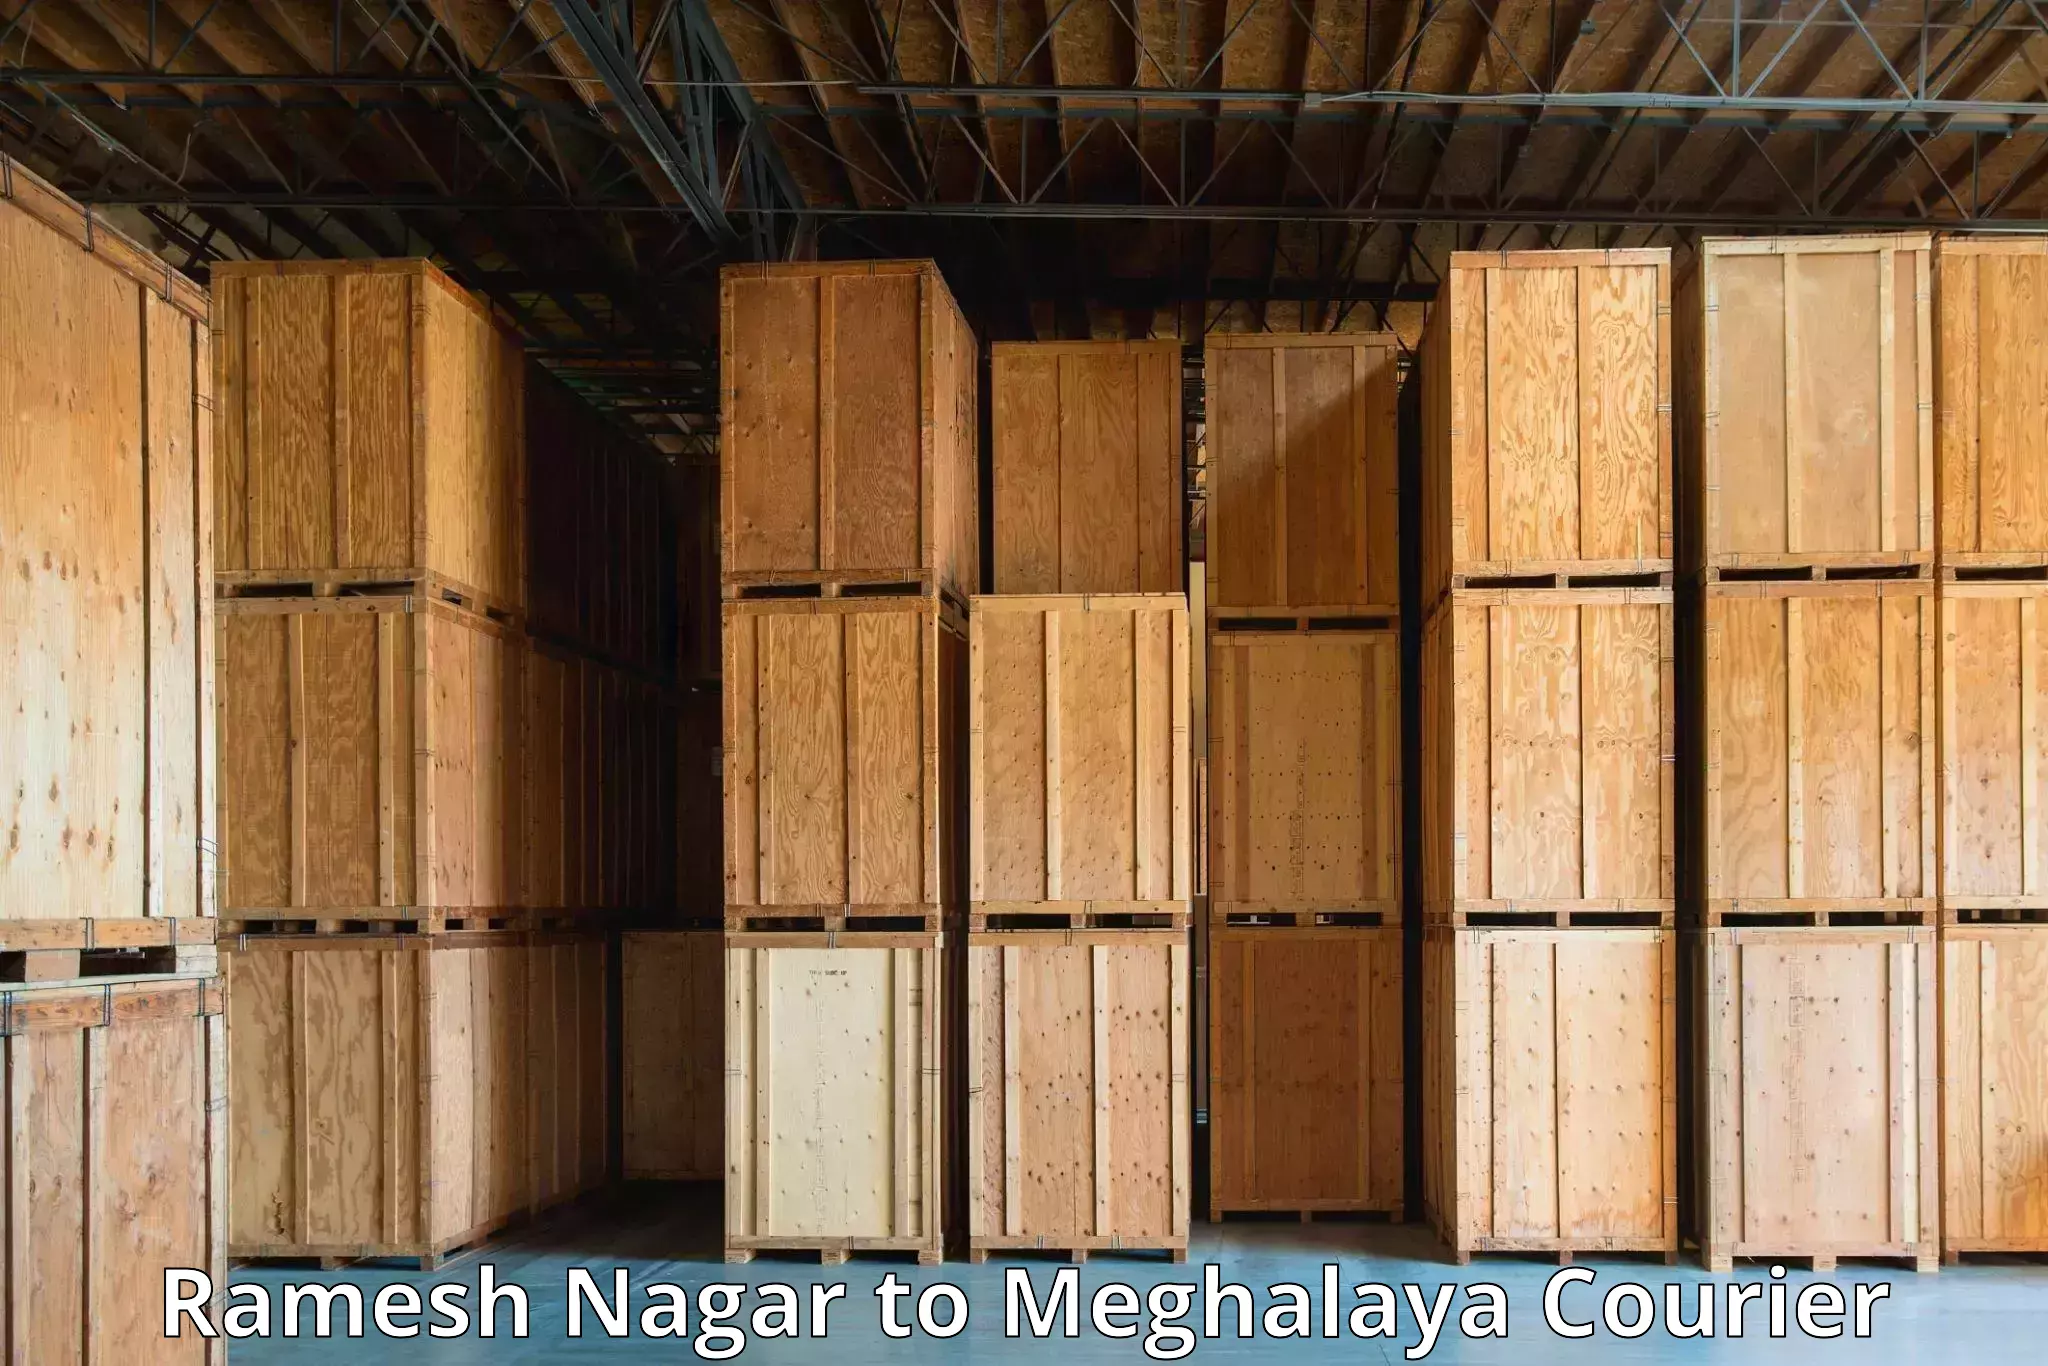 State-of-the-art courier technology Ramesh Nagar to Meghalaya